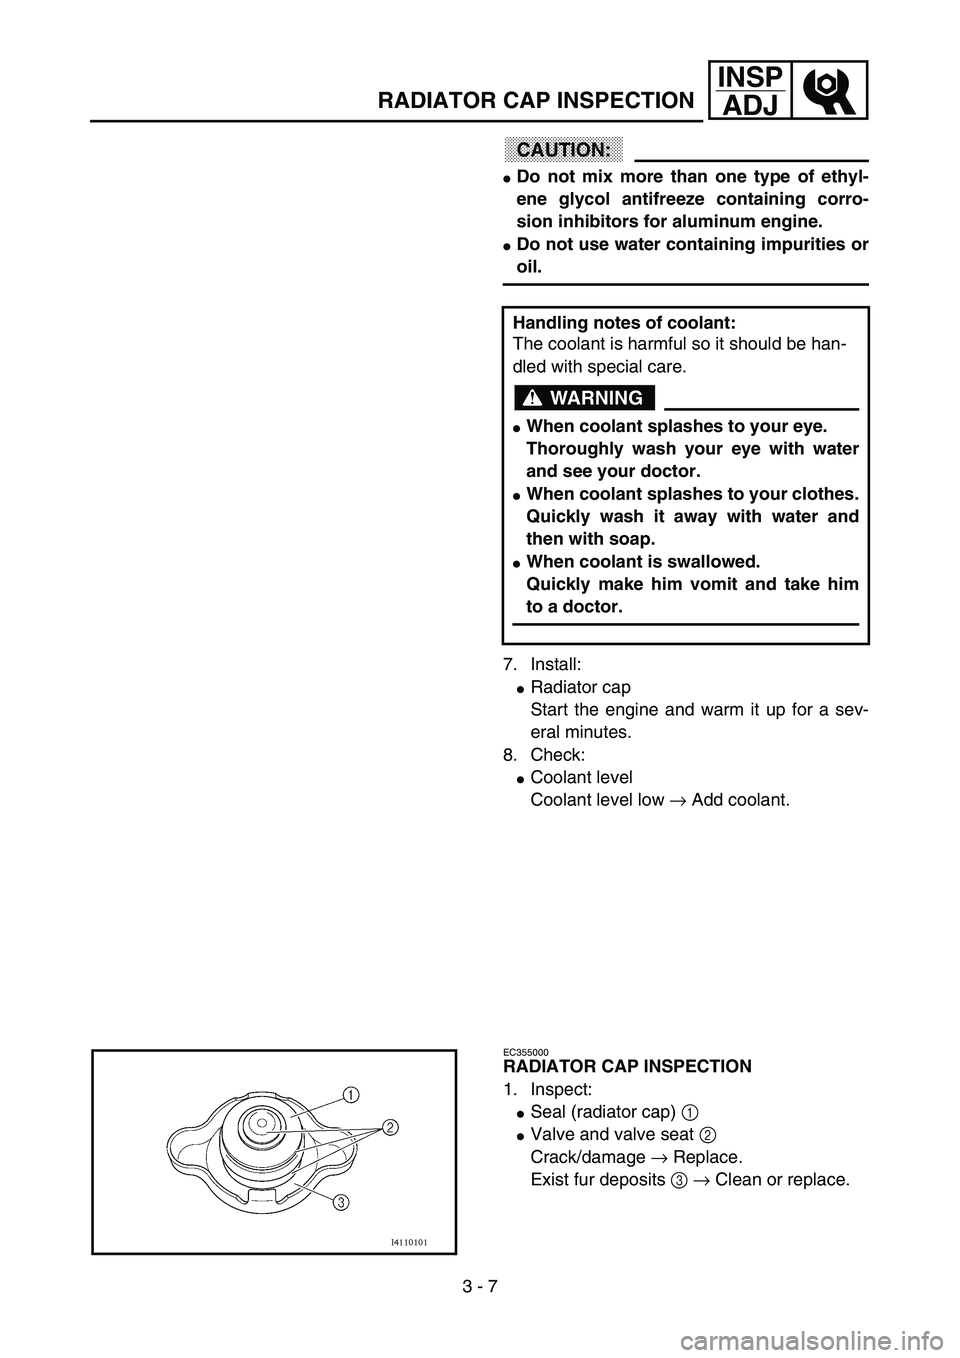 YAMAHA YZ85 2003  Owners Manual 3 - 7
INSP
ADJ
RADIATOR CAP INSPECTION
CAUTION:
Do not mix more than one type of ethyl-
ene glycol antifreeze containing corro-
sion inhibitors for aluminum engine.
Do not use water containing impur